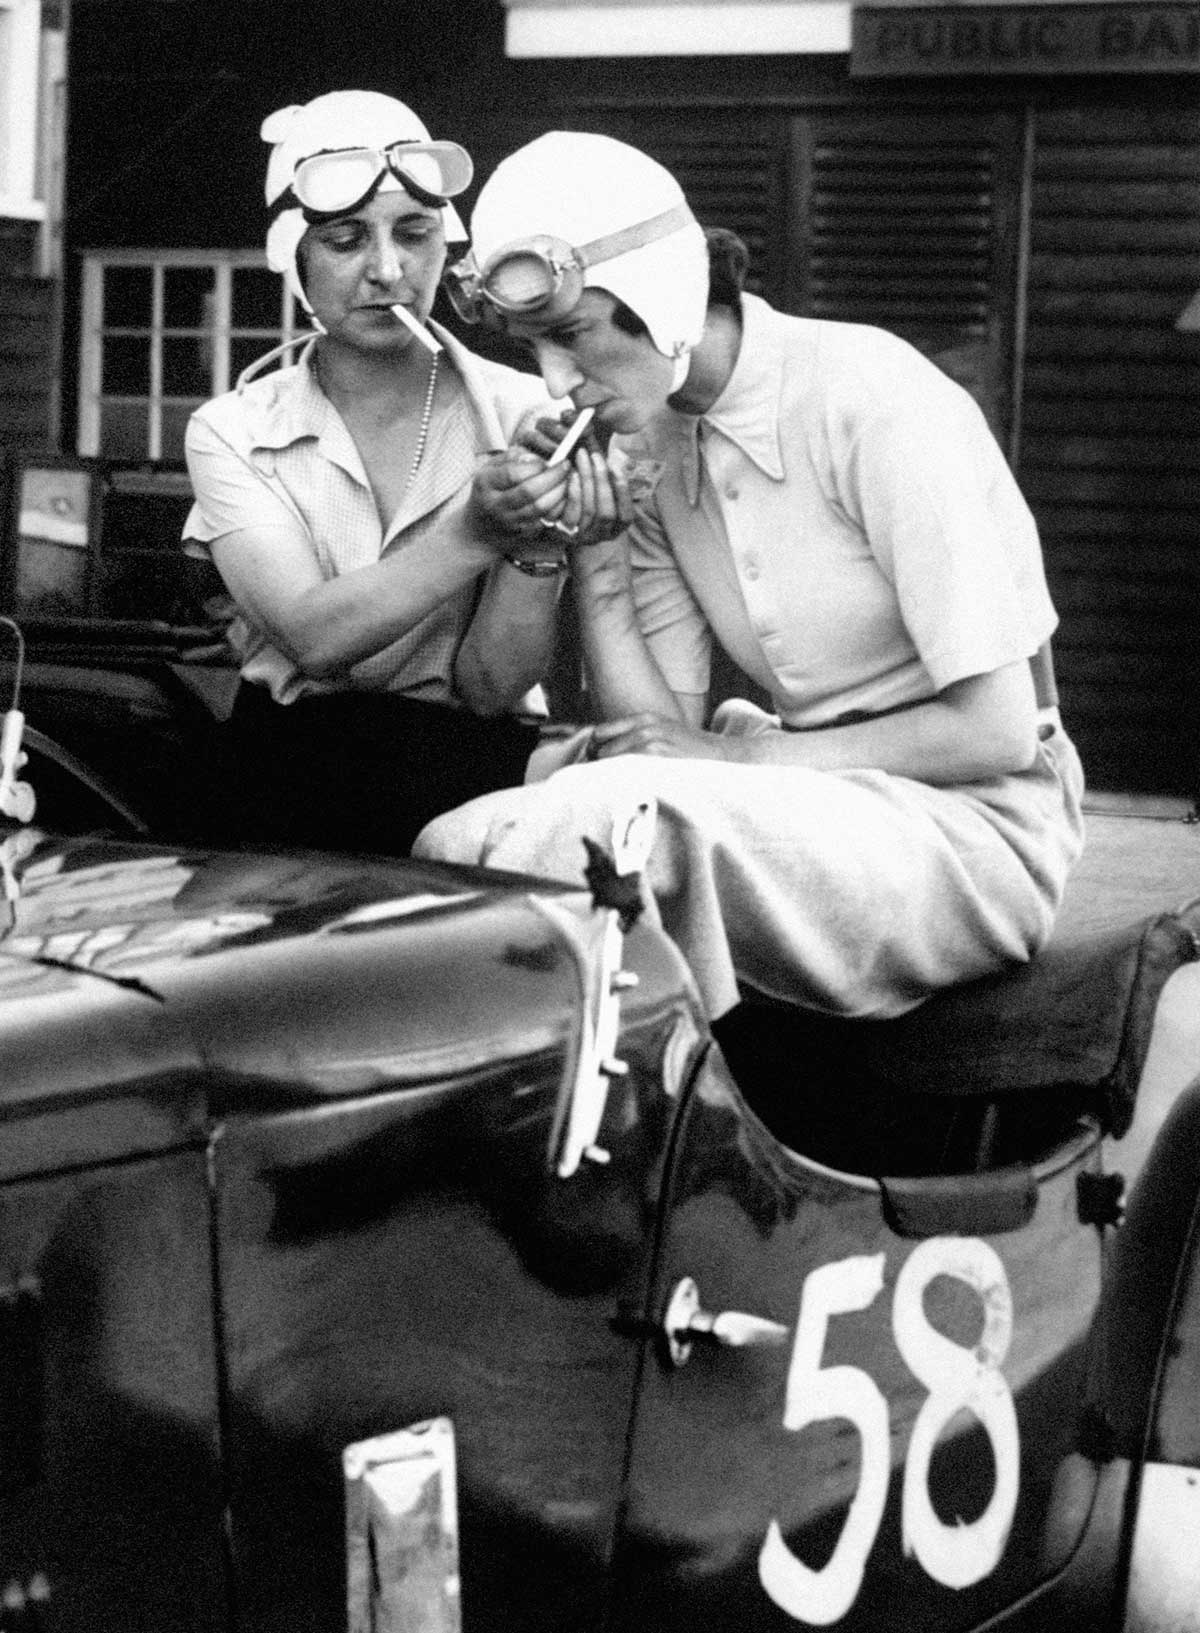 Mrs Gordon Simpson and Joan Richmond smoke cigarettes in their rally car, 1934